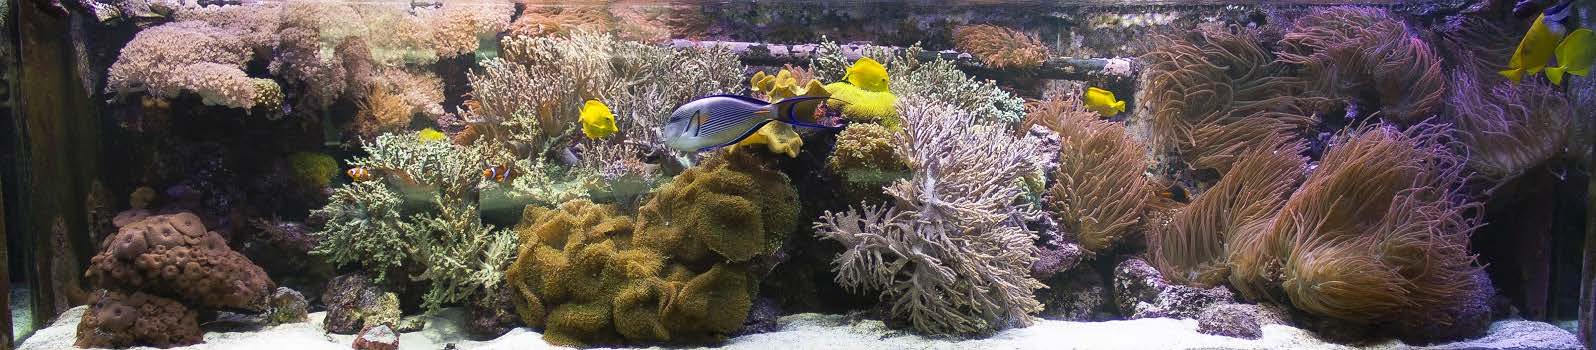 The secrets hidden in coral reefs